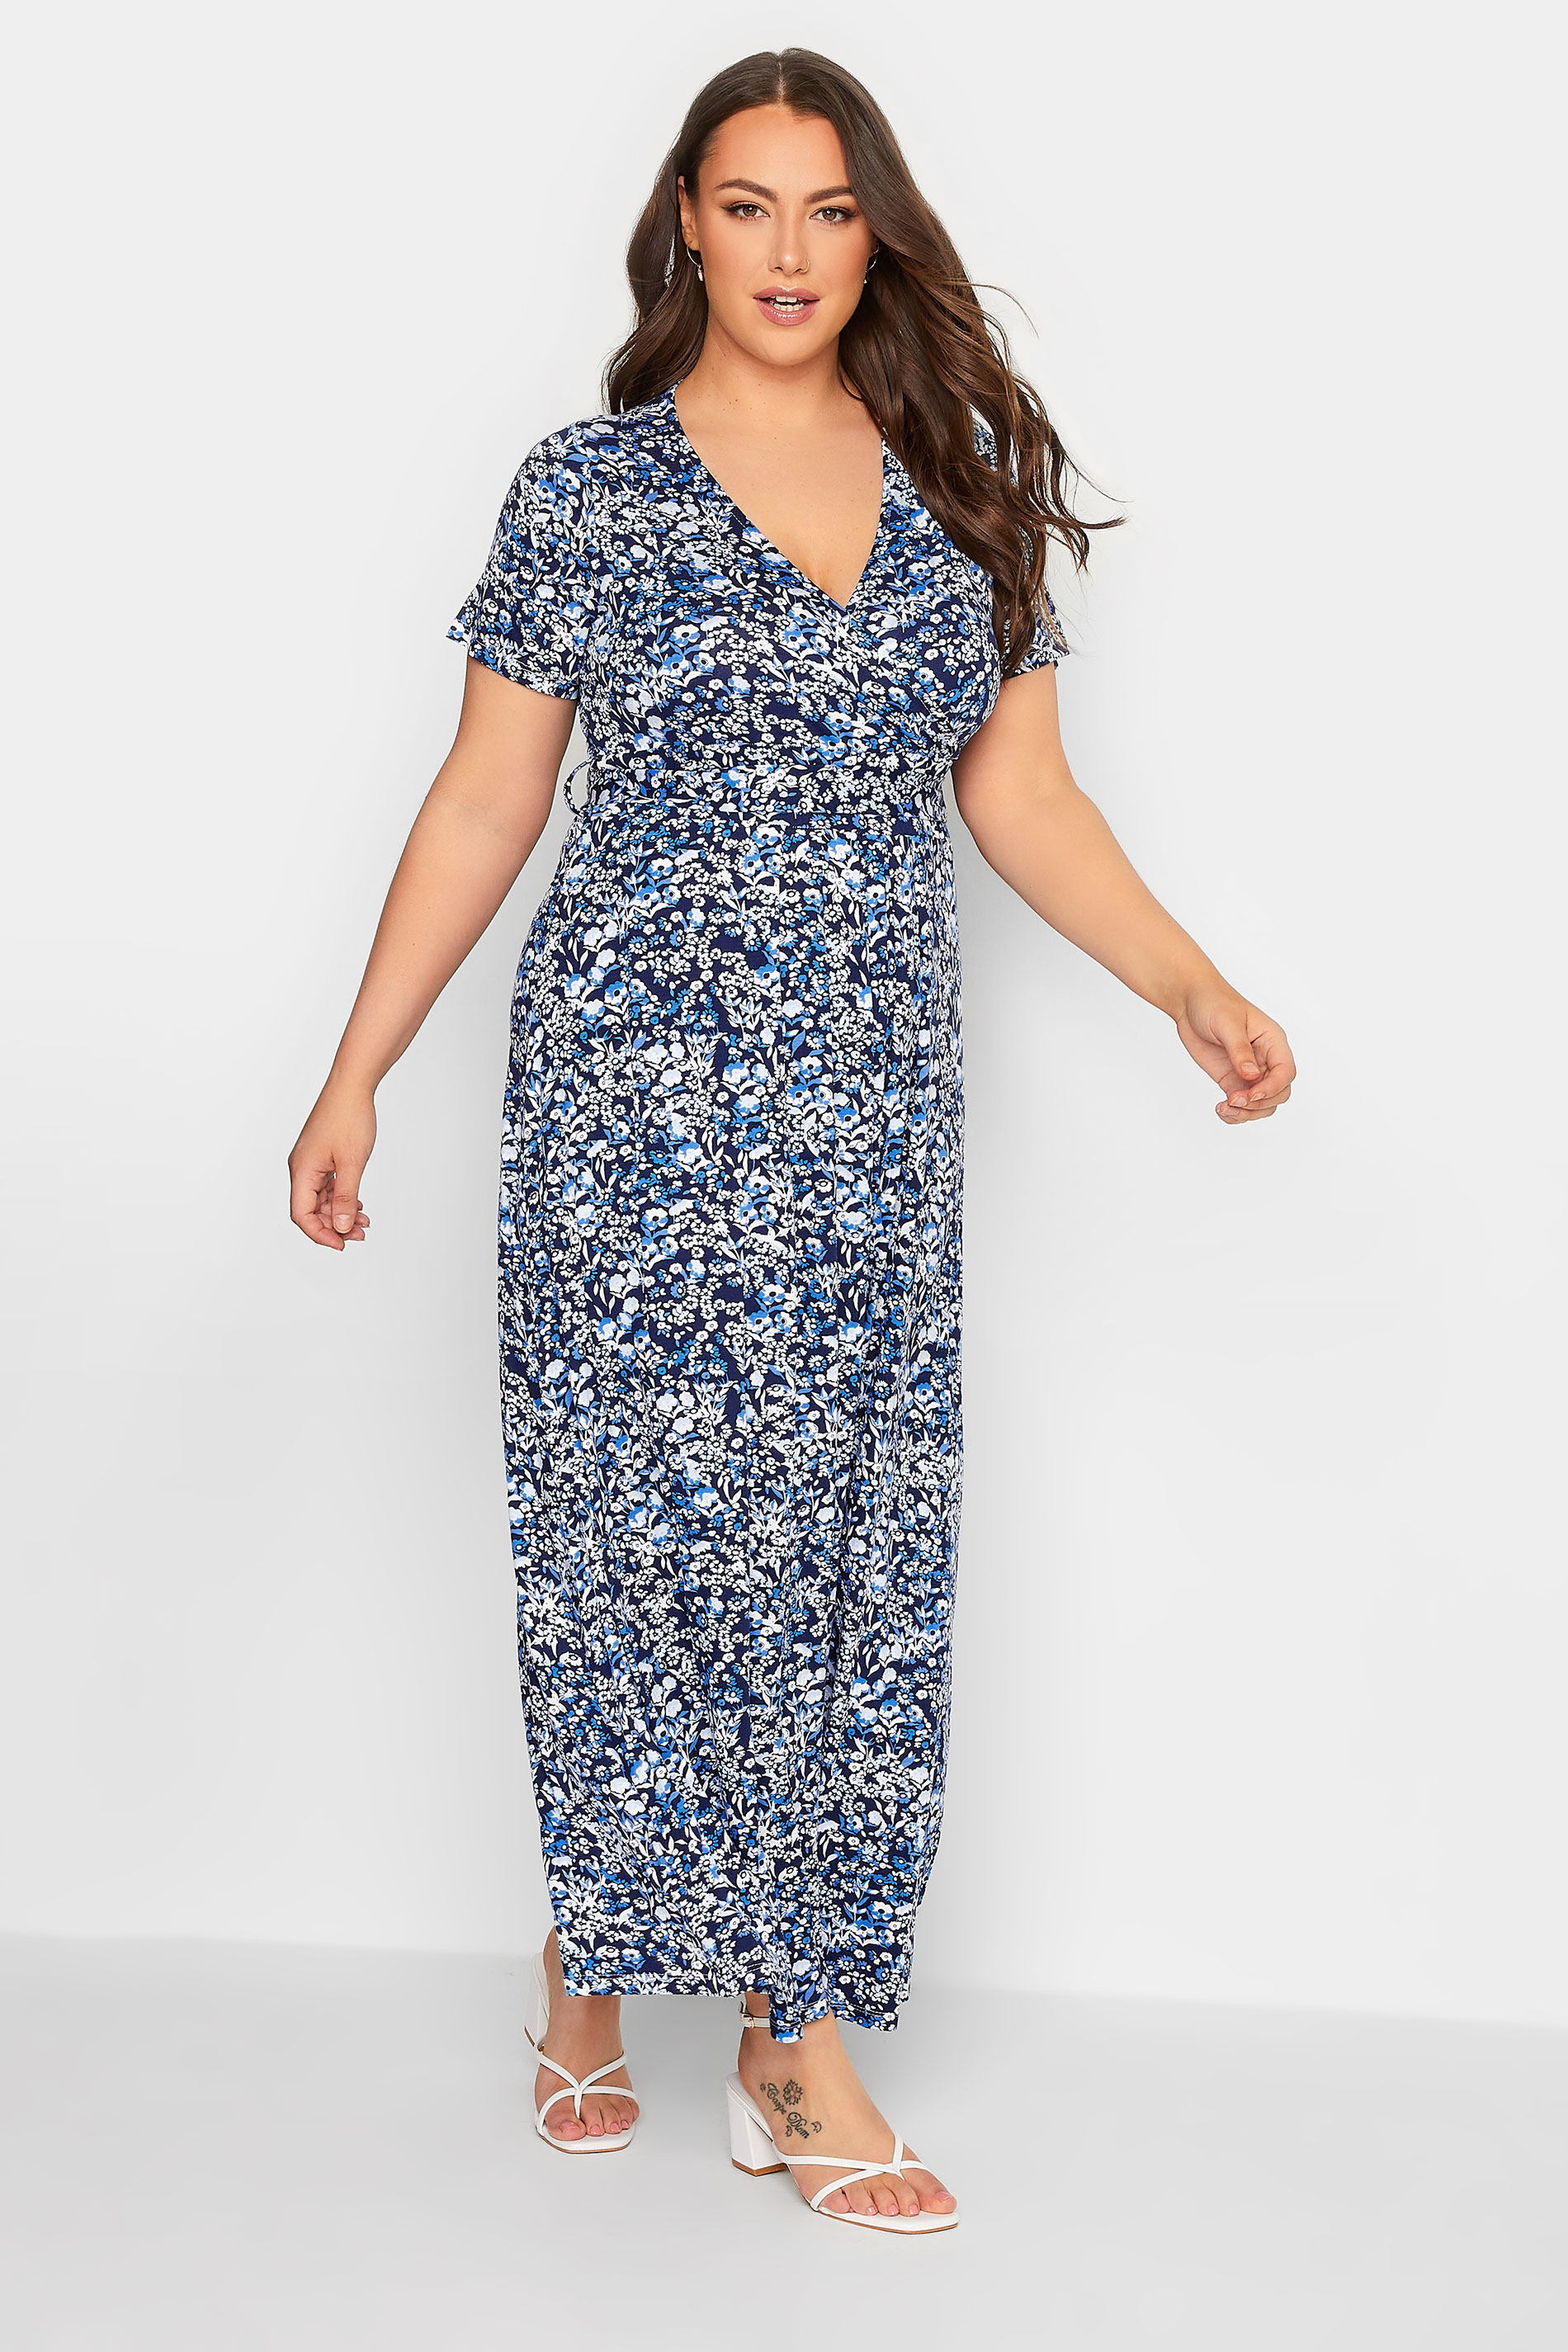 YOURS Curve Plus Size Black & Blue Ditsy Floral Wrap Dress | Yours Clothing  1